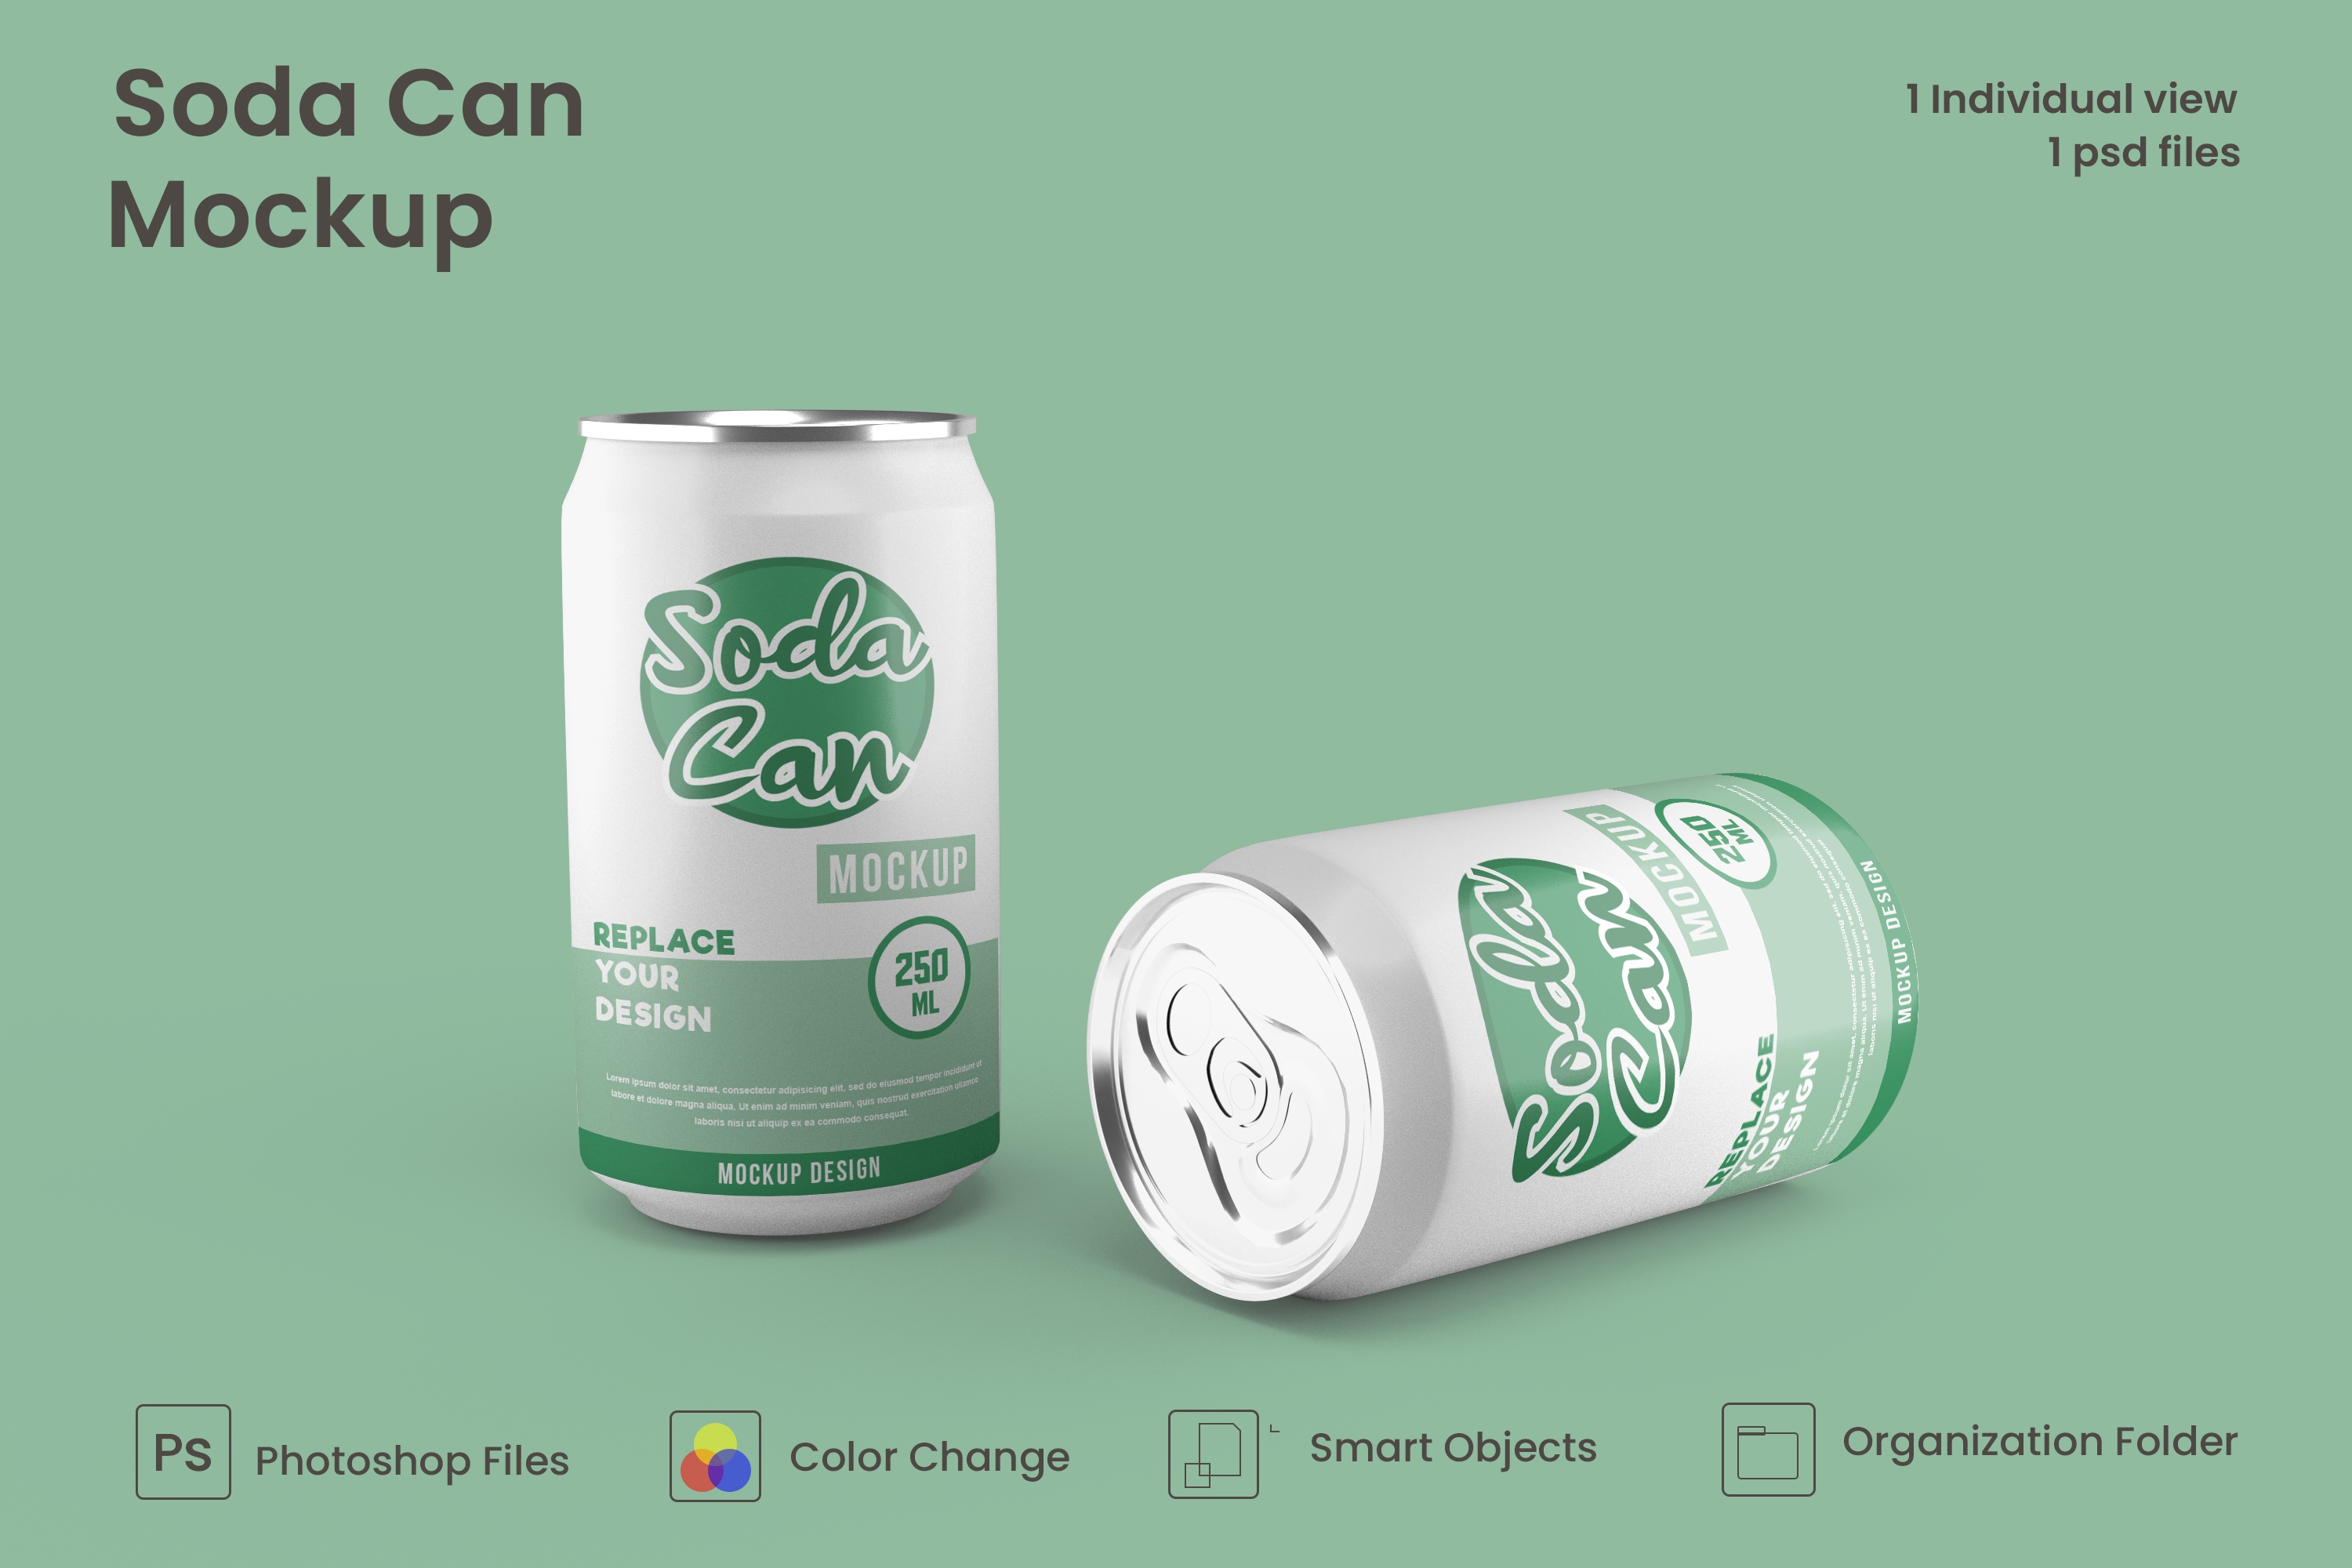 Soda Can Mockup Design